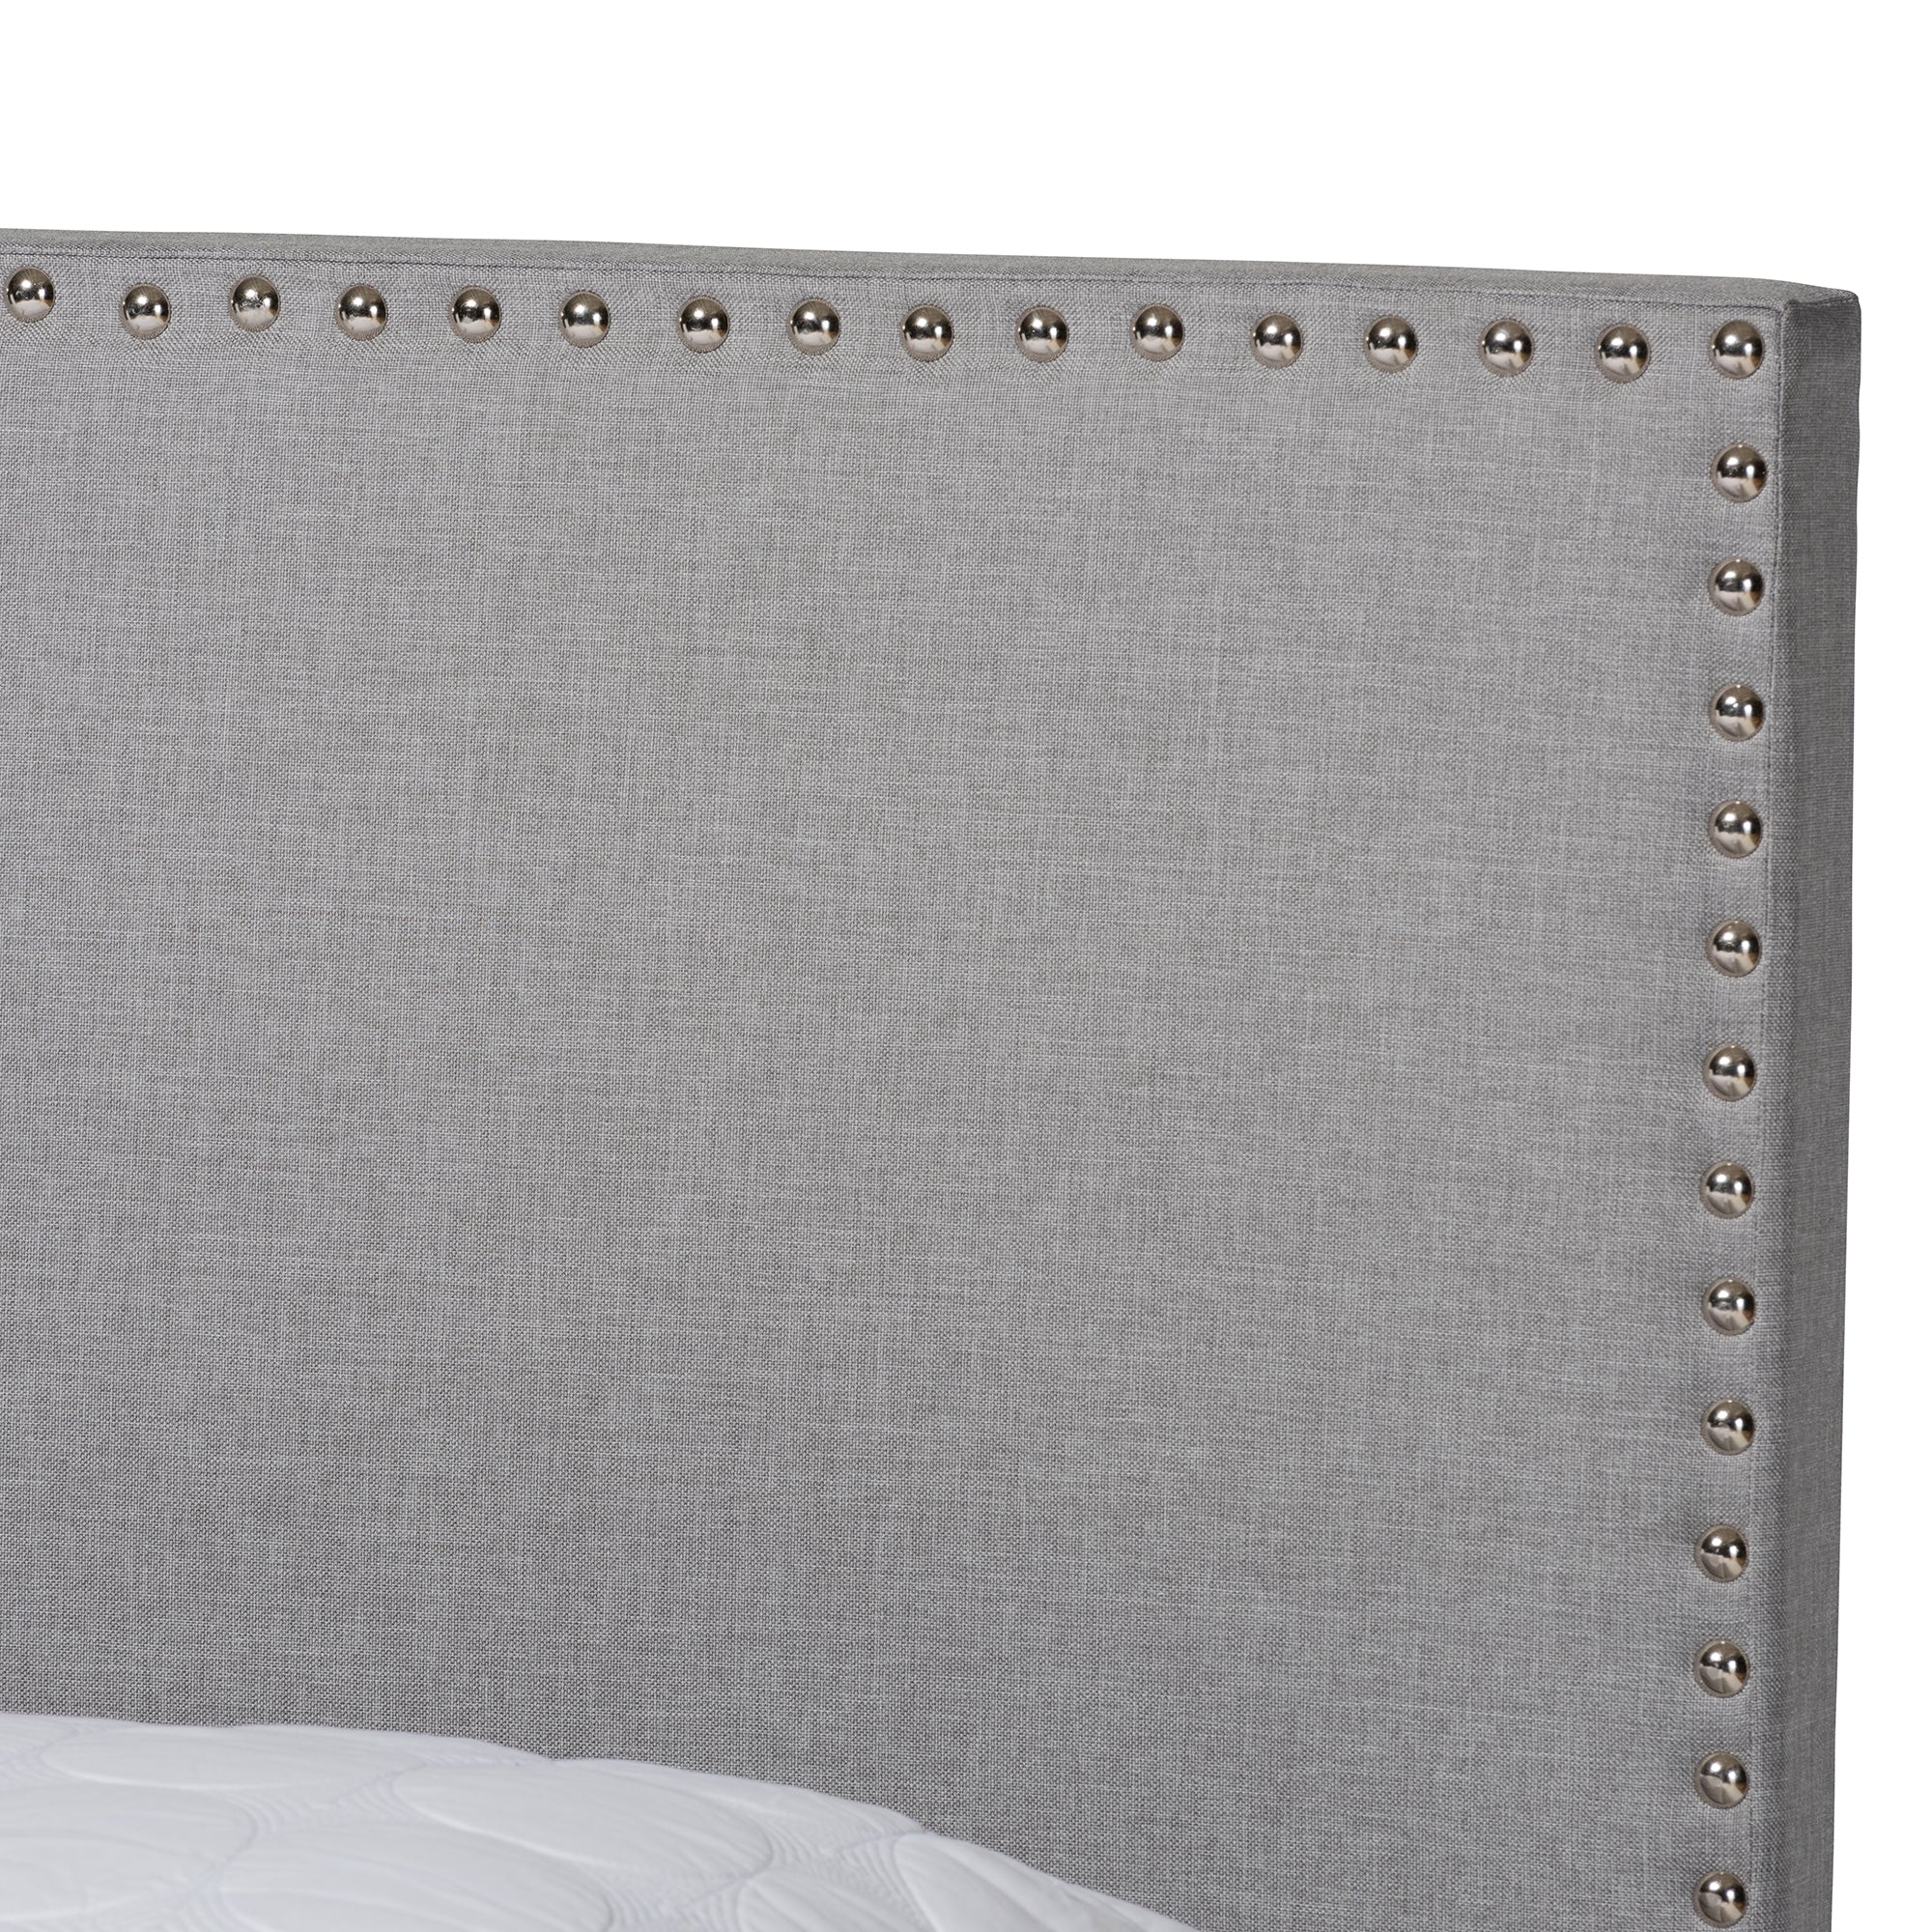 Ramon Modern Bed with Nailhead Trim-Bed-Baxton Studio - WI-Wall2Wall Furnishings